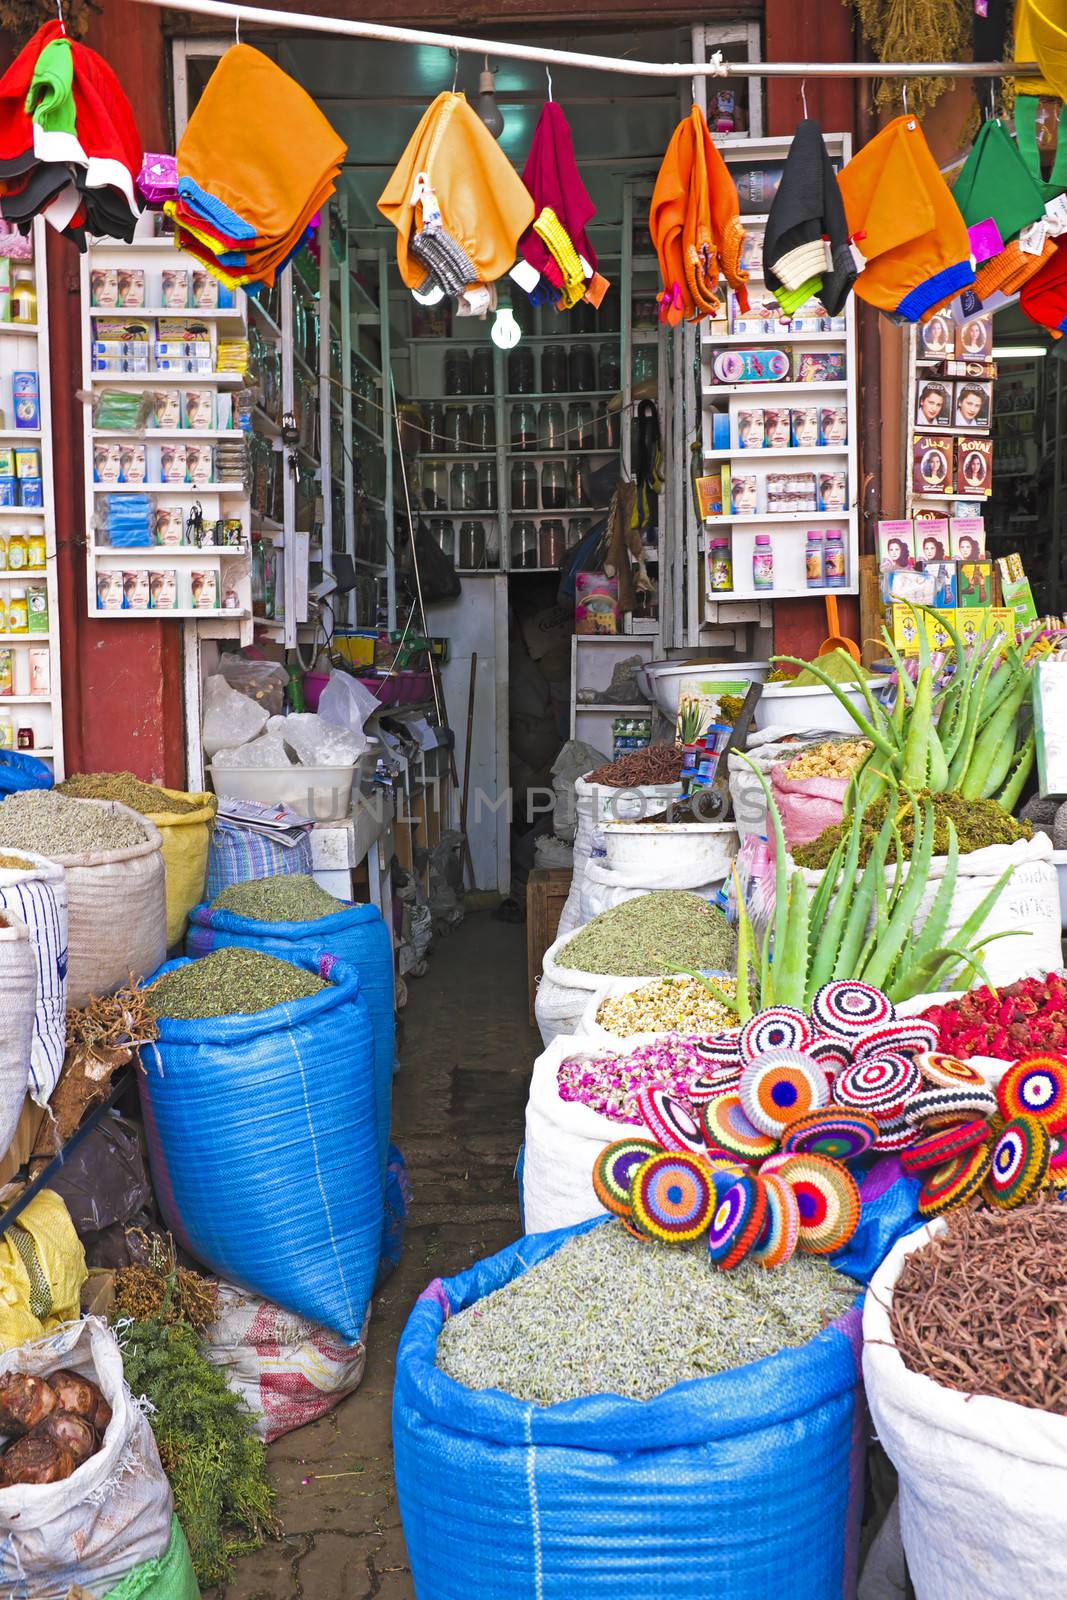 Spice shop in Marrakech Morocco by devy